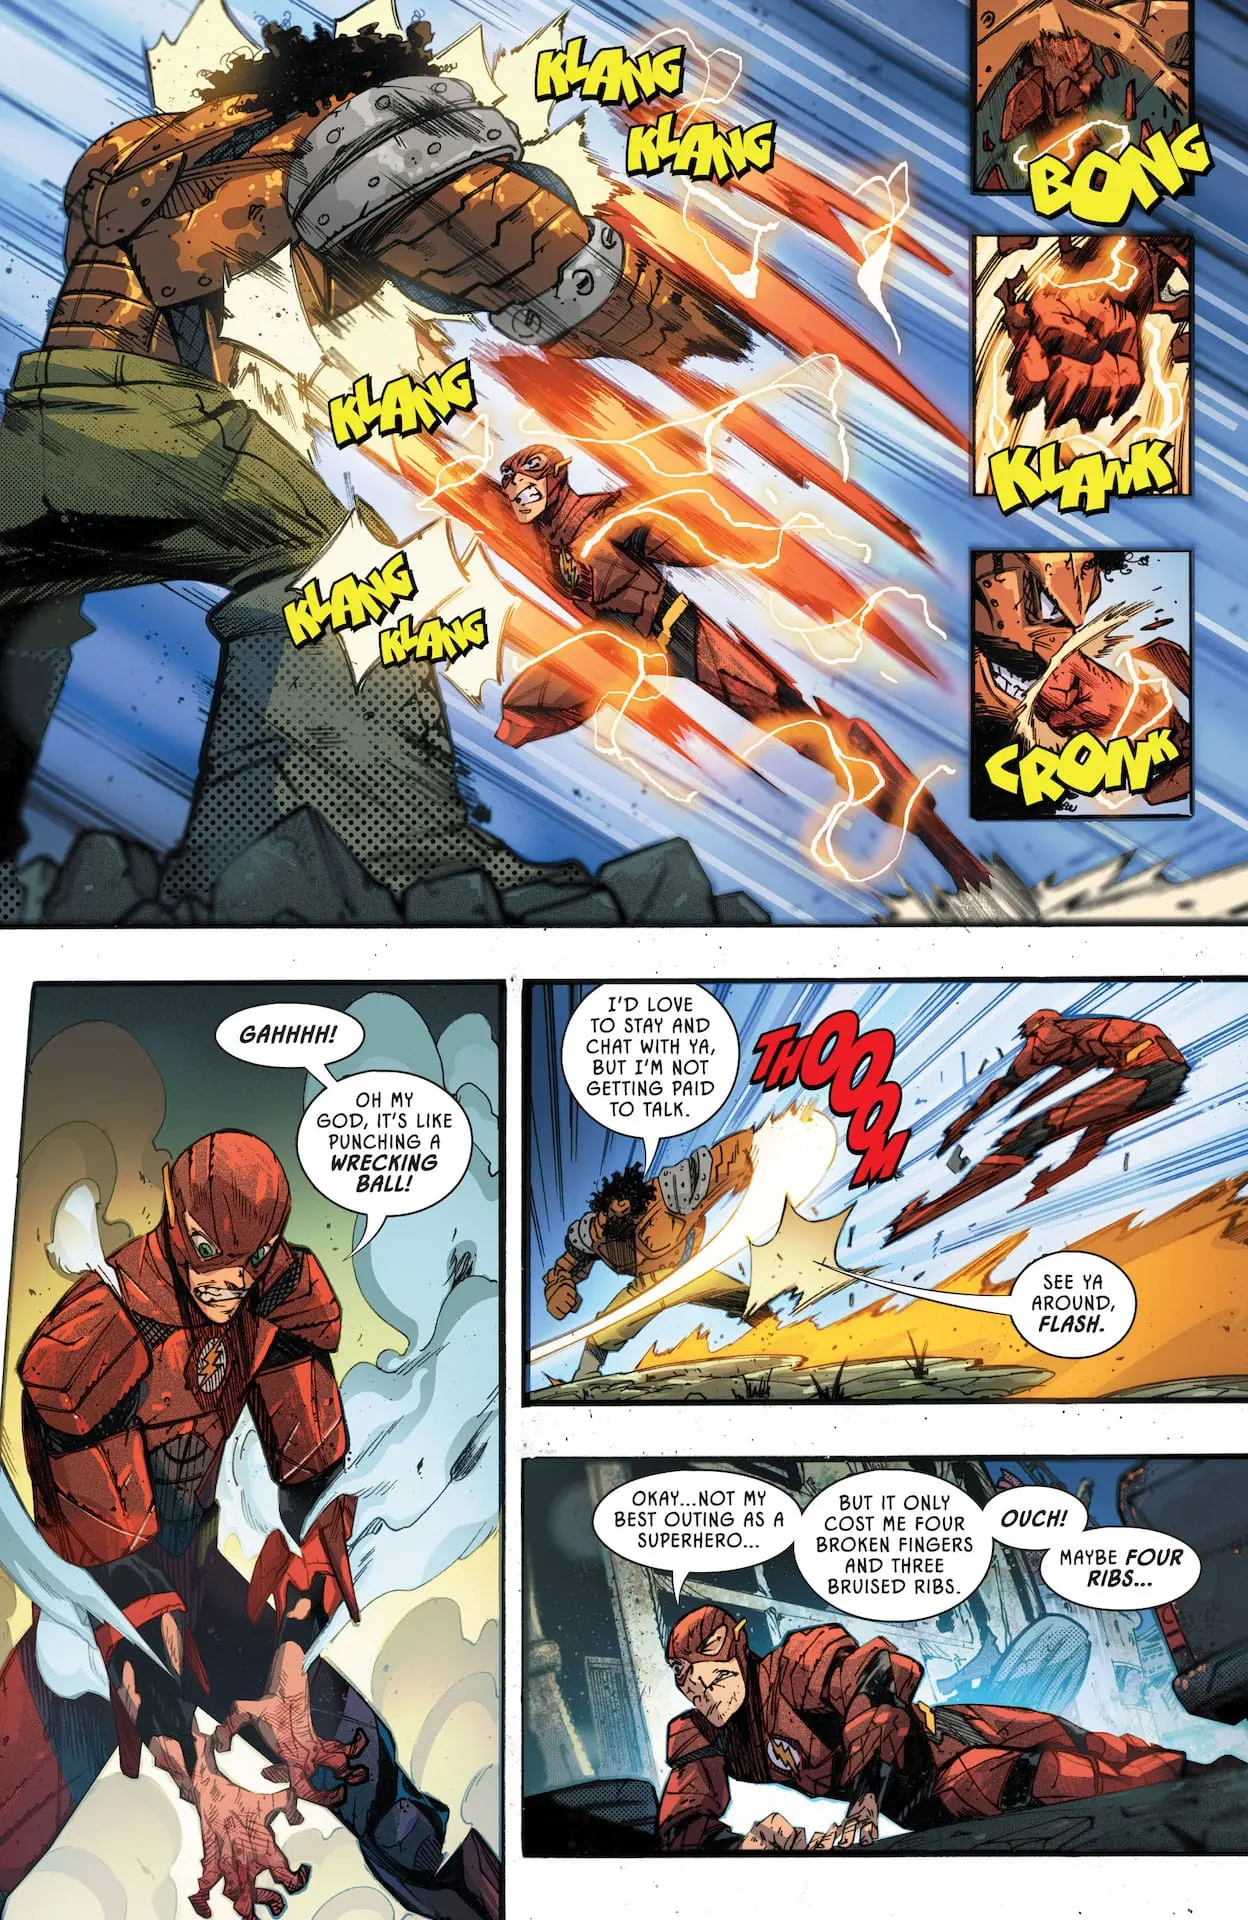 The-Flash-The-Fastest-Man-Alive-1-5-min-legadodadc.webp